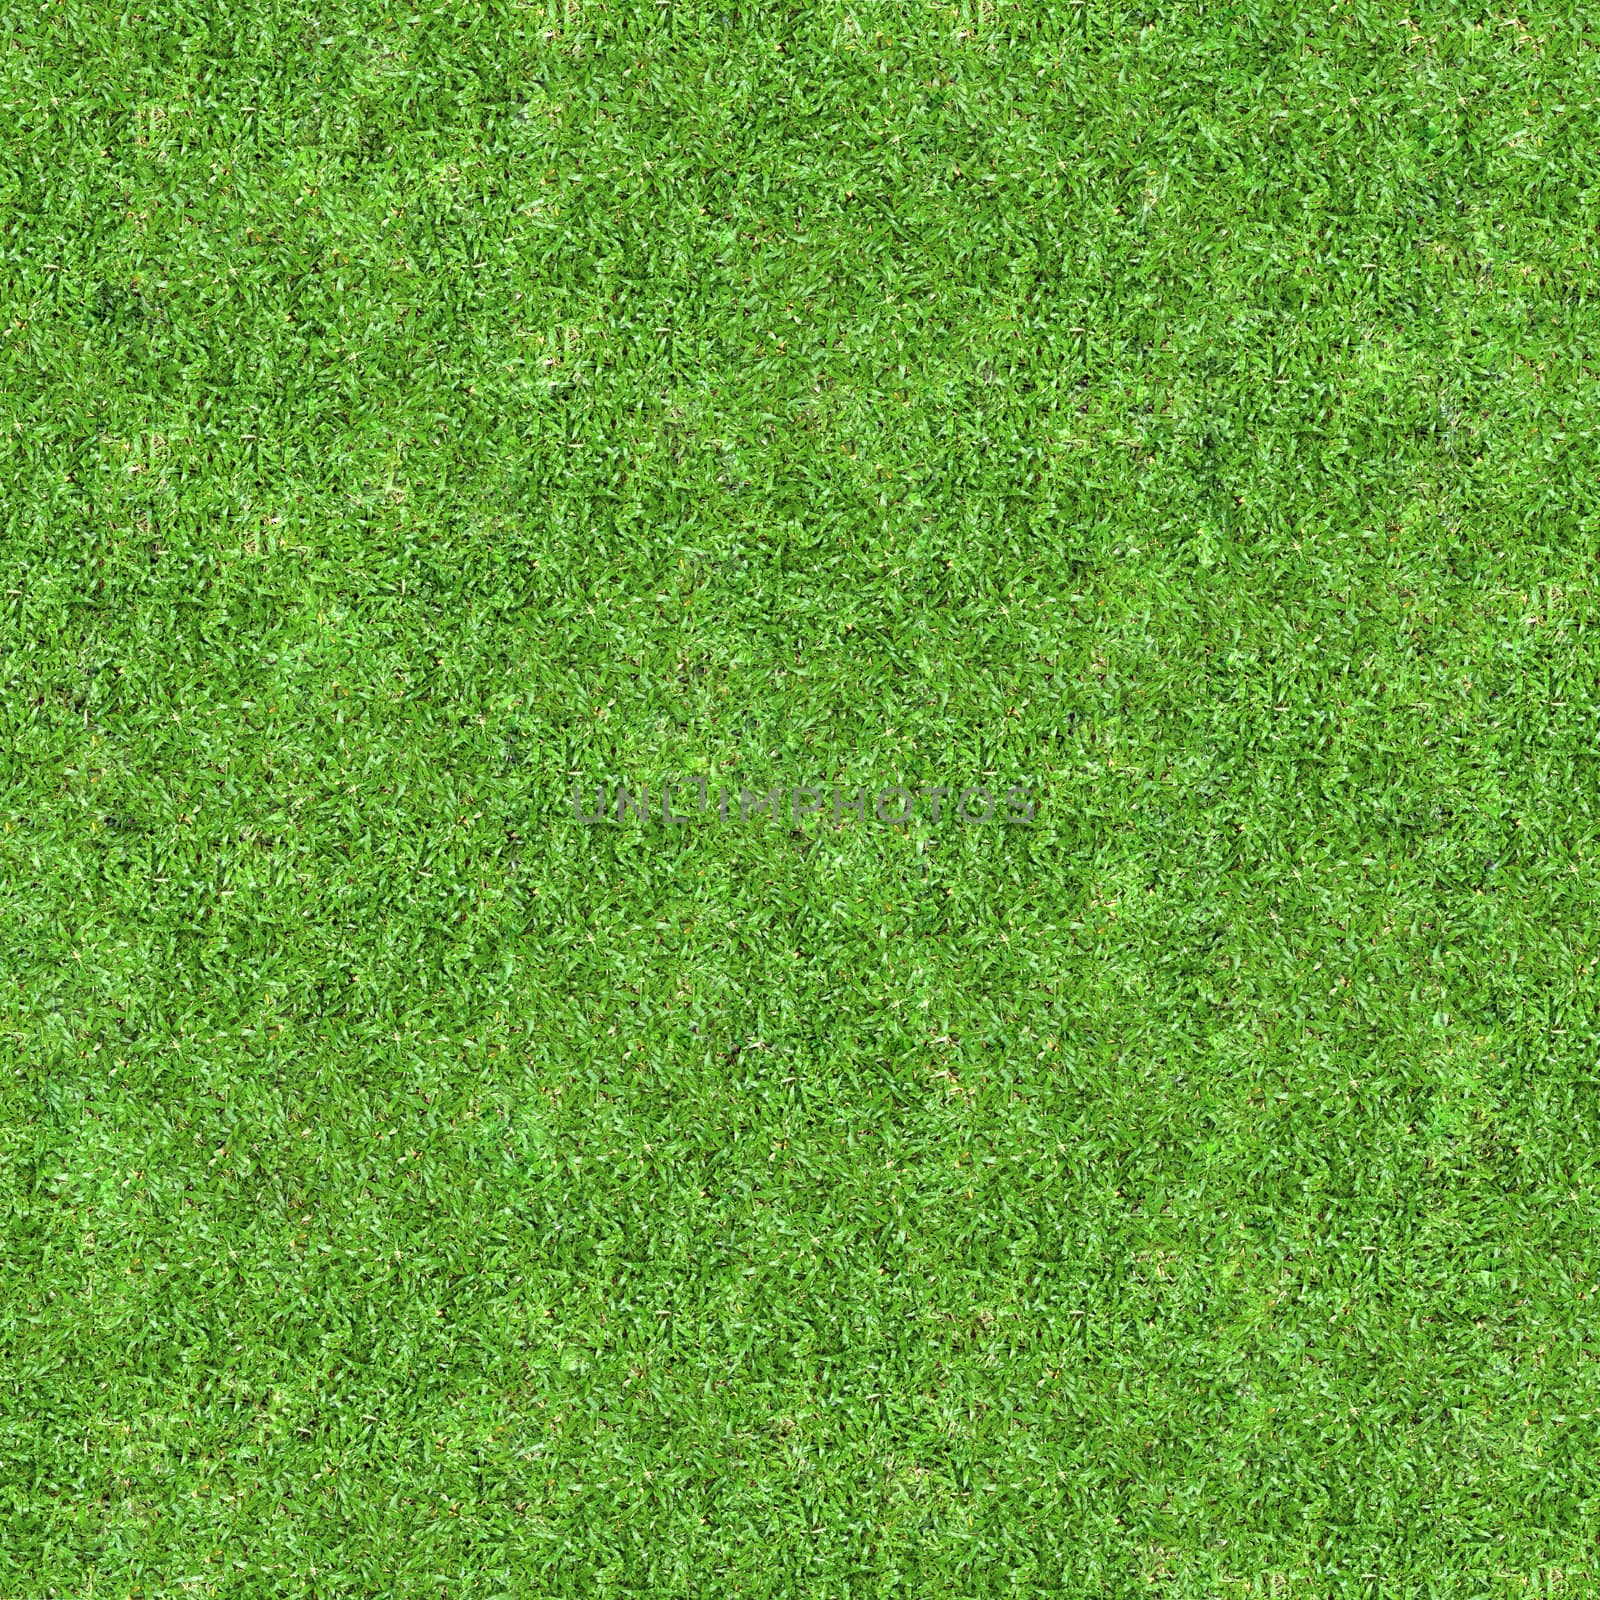 grass texture by antpkr